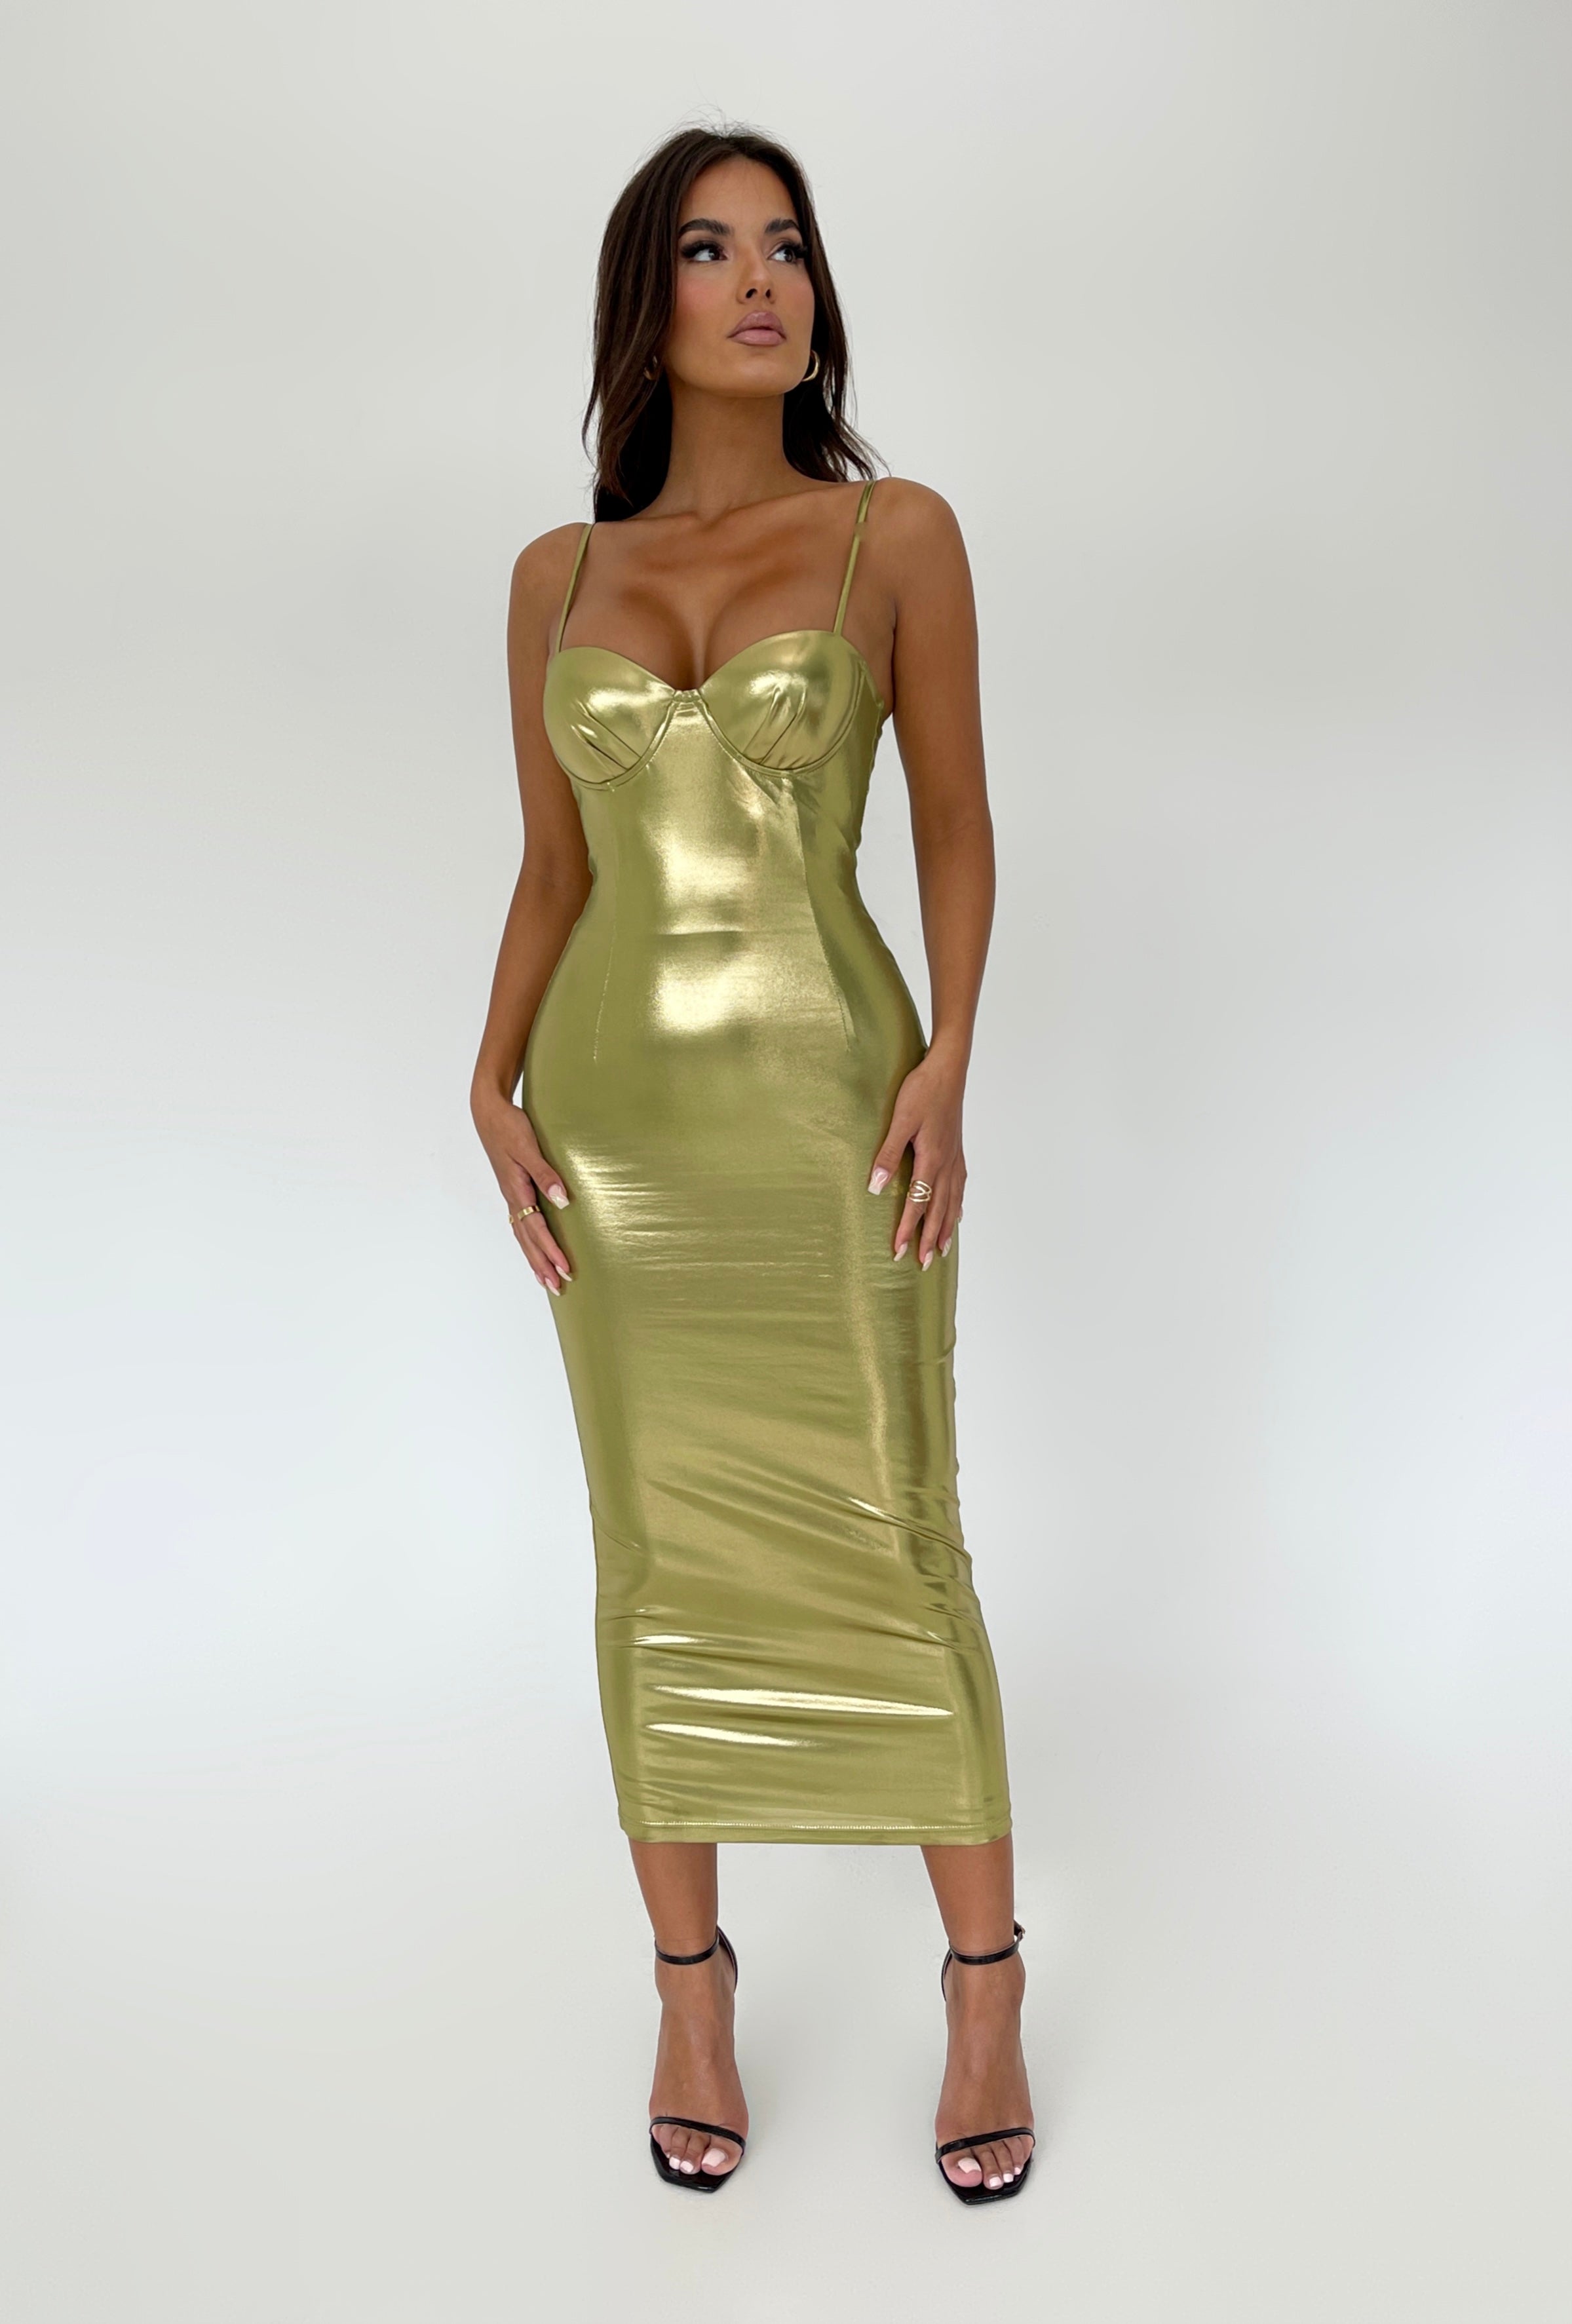 Avenie Gold Dress